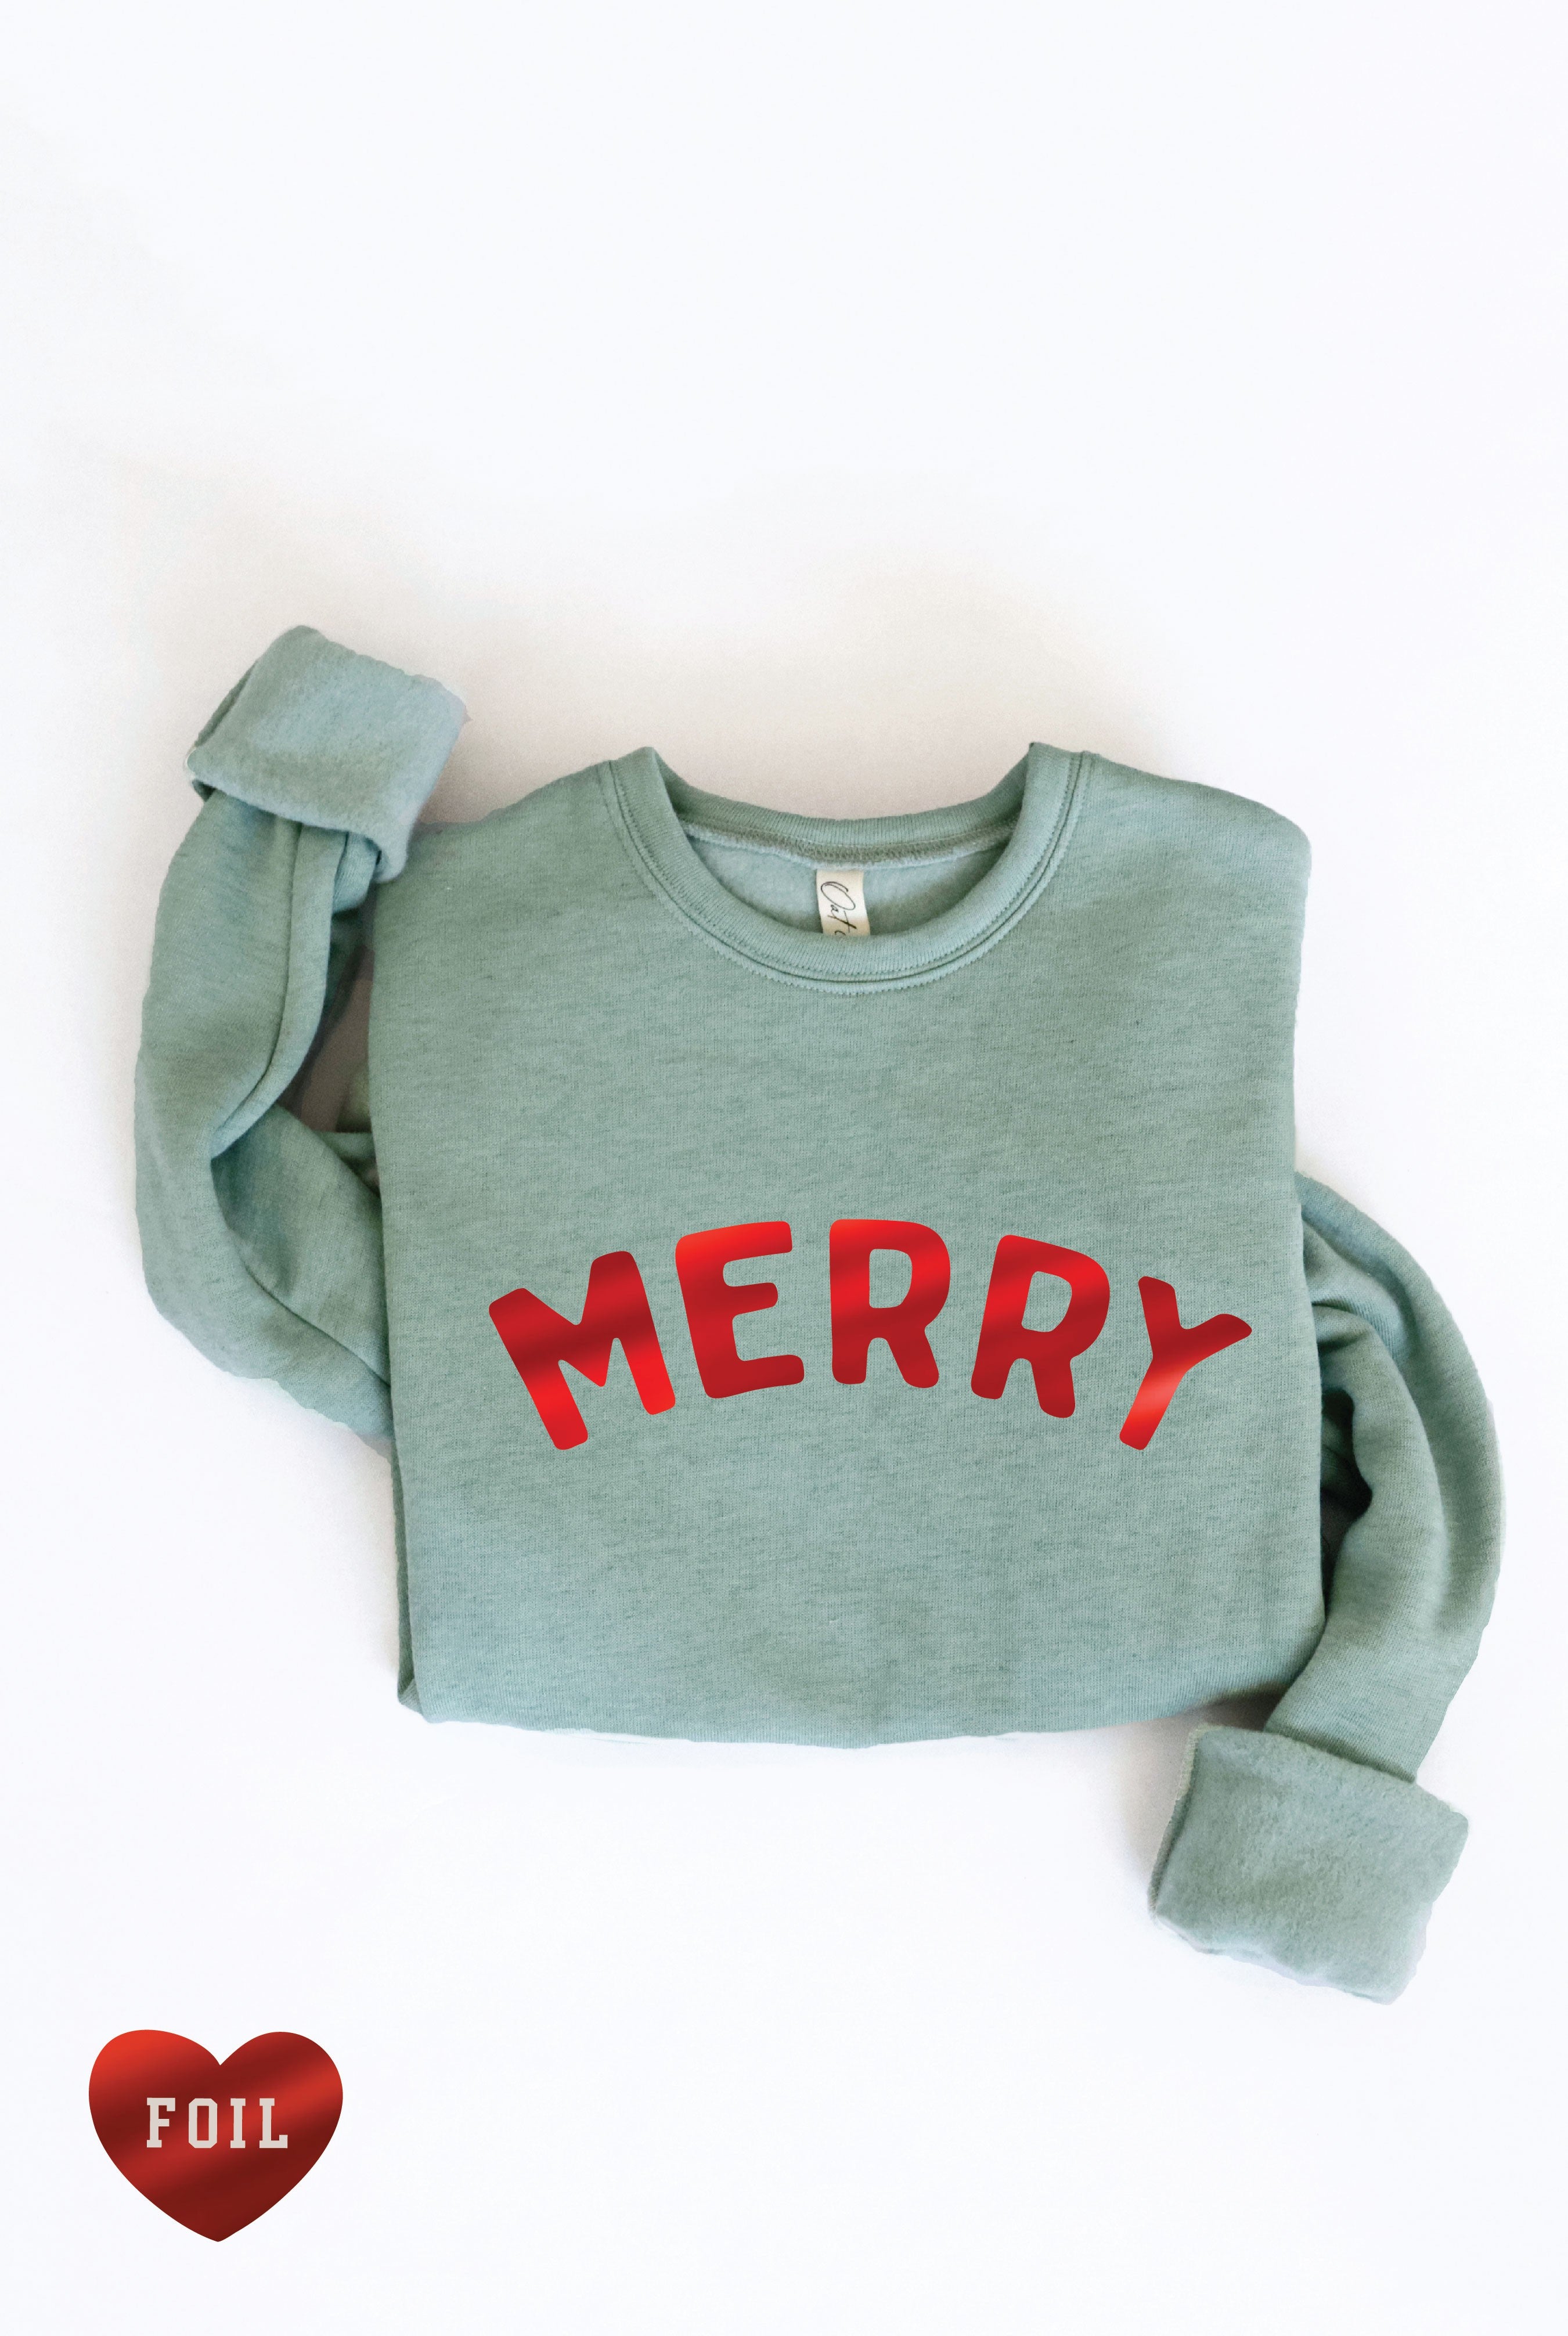 Merry Foil Graphic Sweatshirt